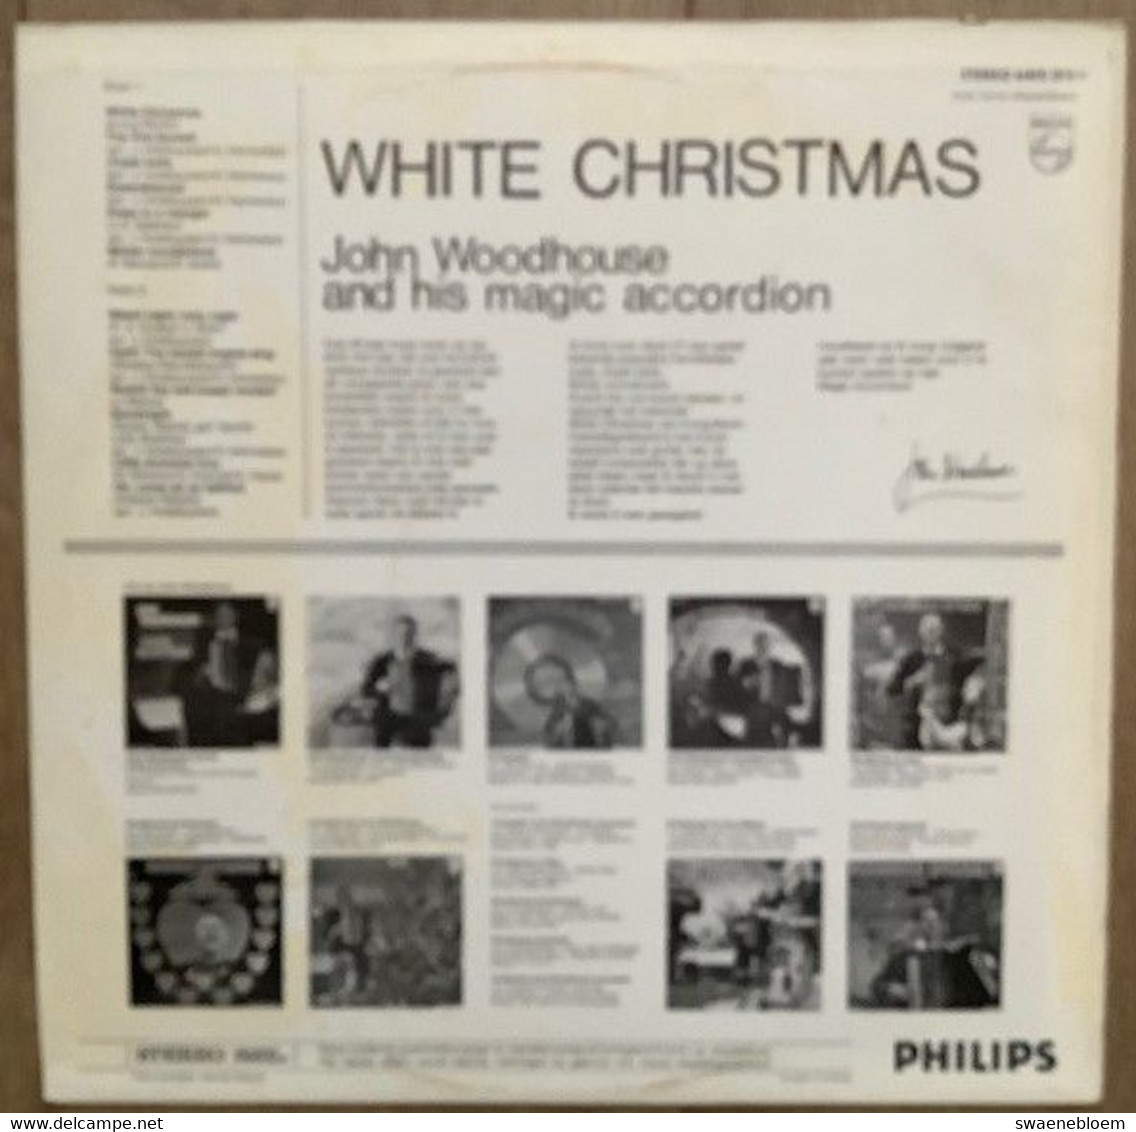 LP.- WHITE CHRISTMAS. JOHN WOODHOUSE & HIS MAGIC ACCORDION - Navidad